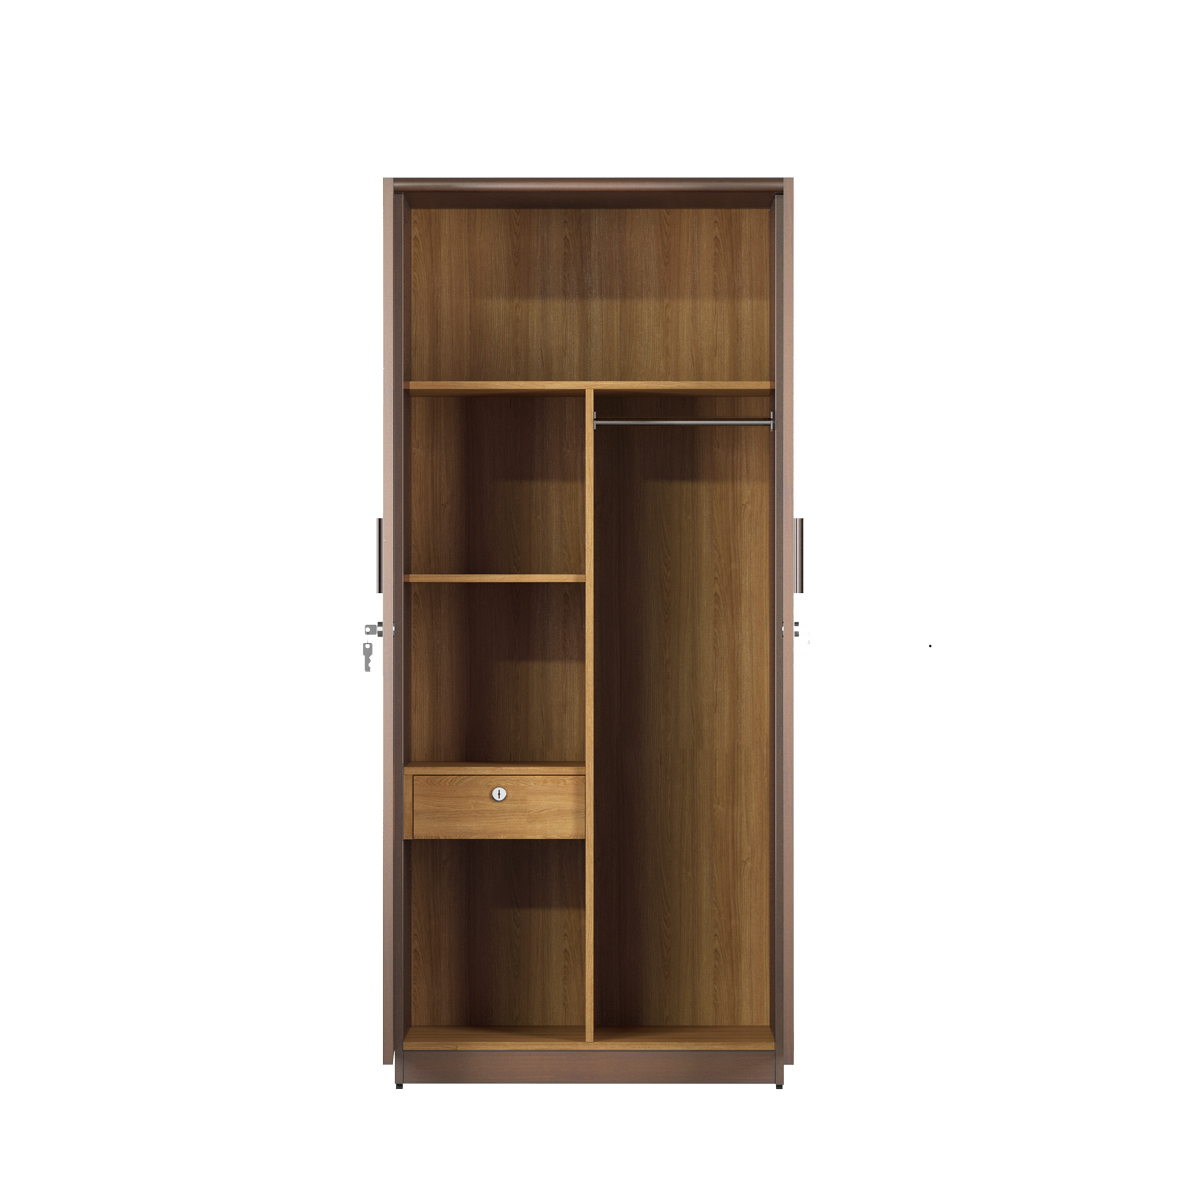 Wooden almirah/ Cupboard l CBH-367-3-1-20